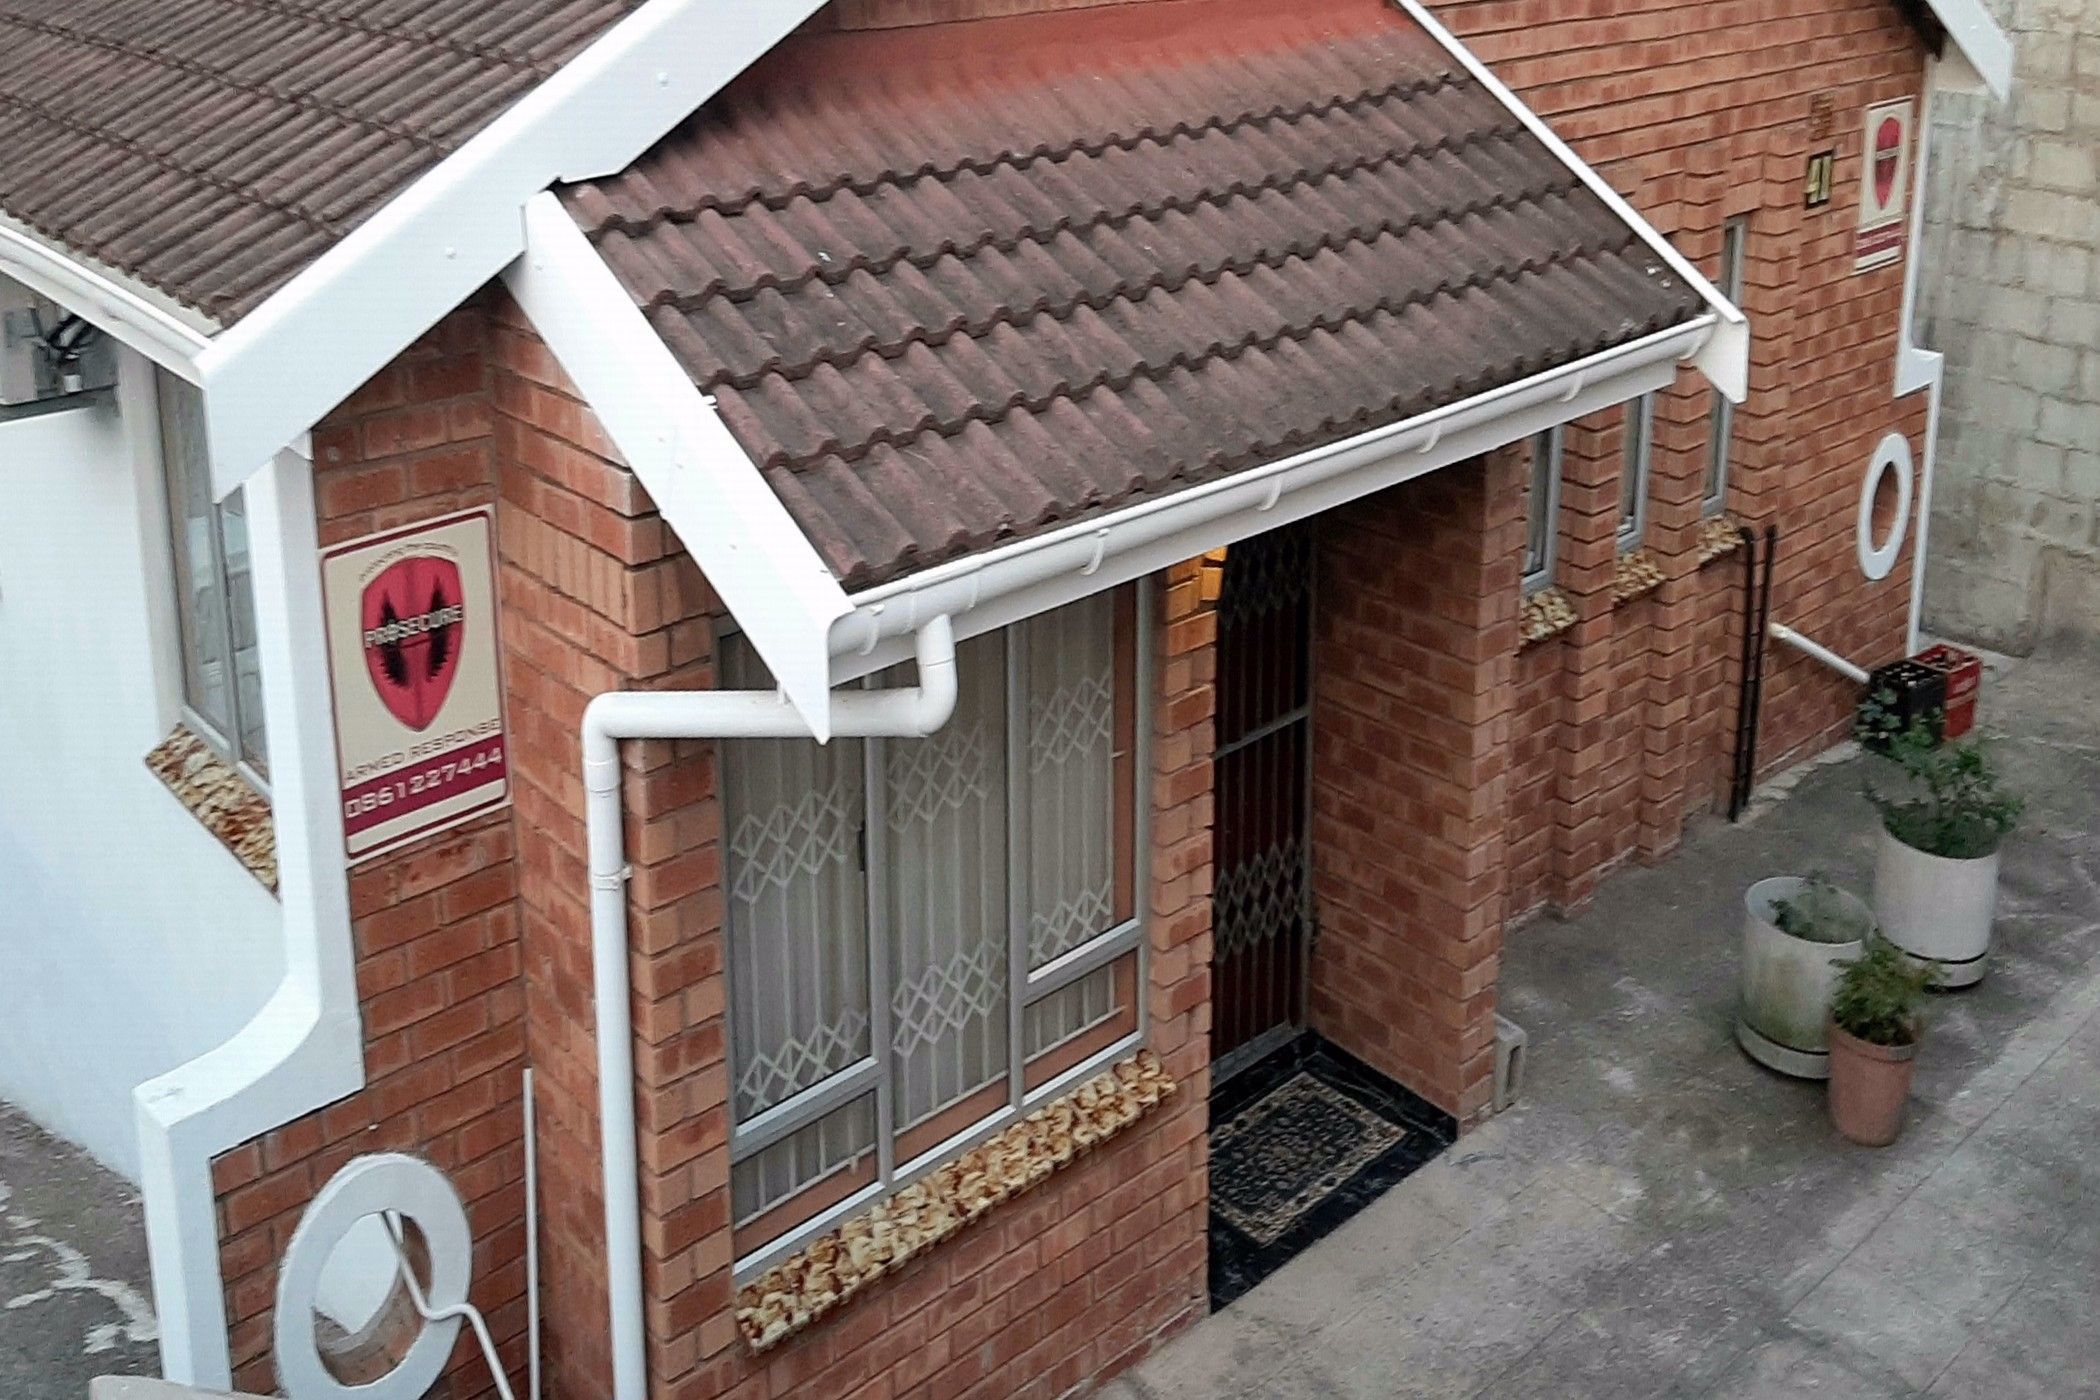 3 bedroom house for sale in Chatsworth (KwaZulu-Natal)